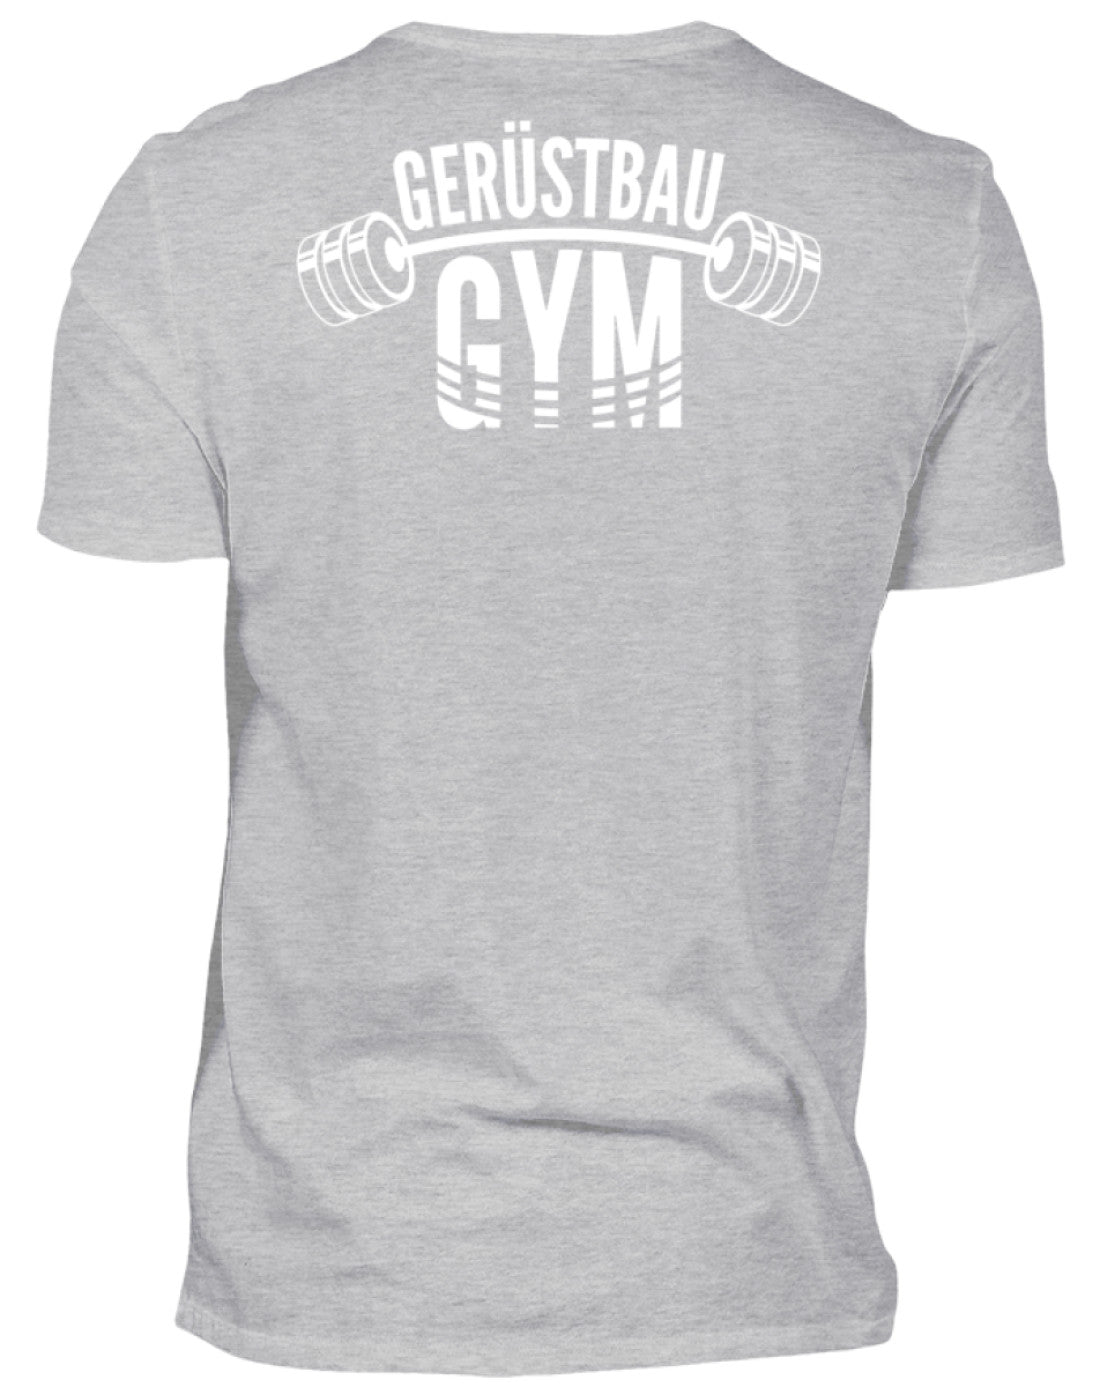 Gerüstbauer T-Shirt / Gerüstbau GYM €24.95 Gerüstbauer - Shop >>